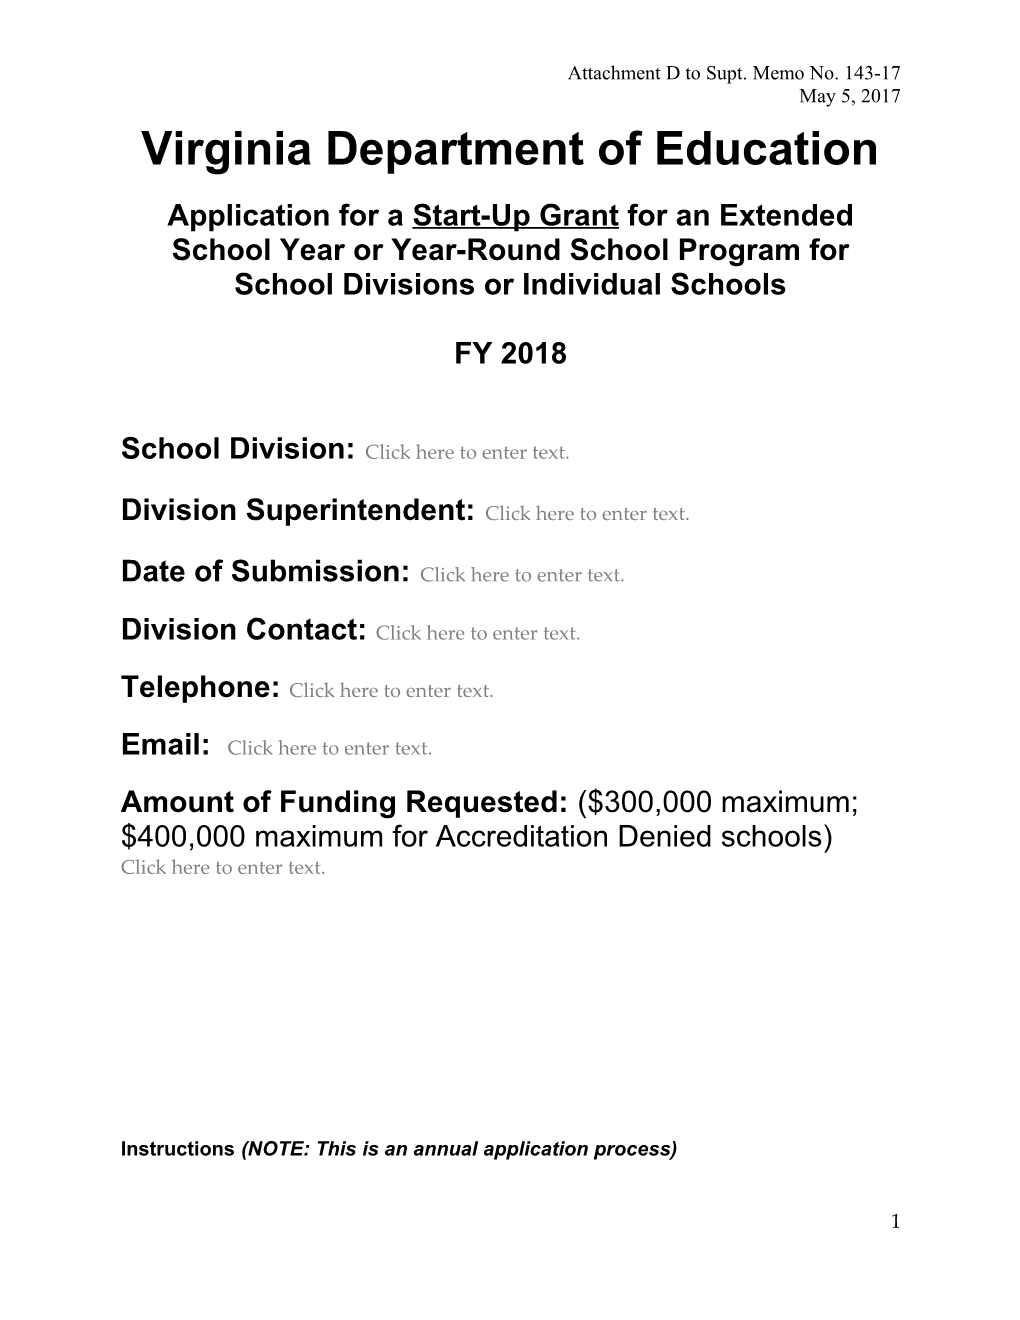 Virginia Department of Education s9